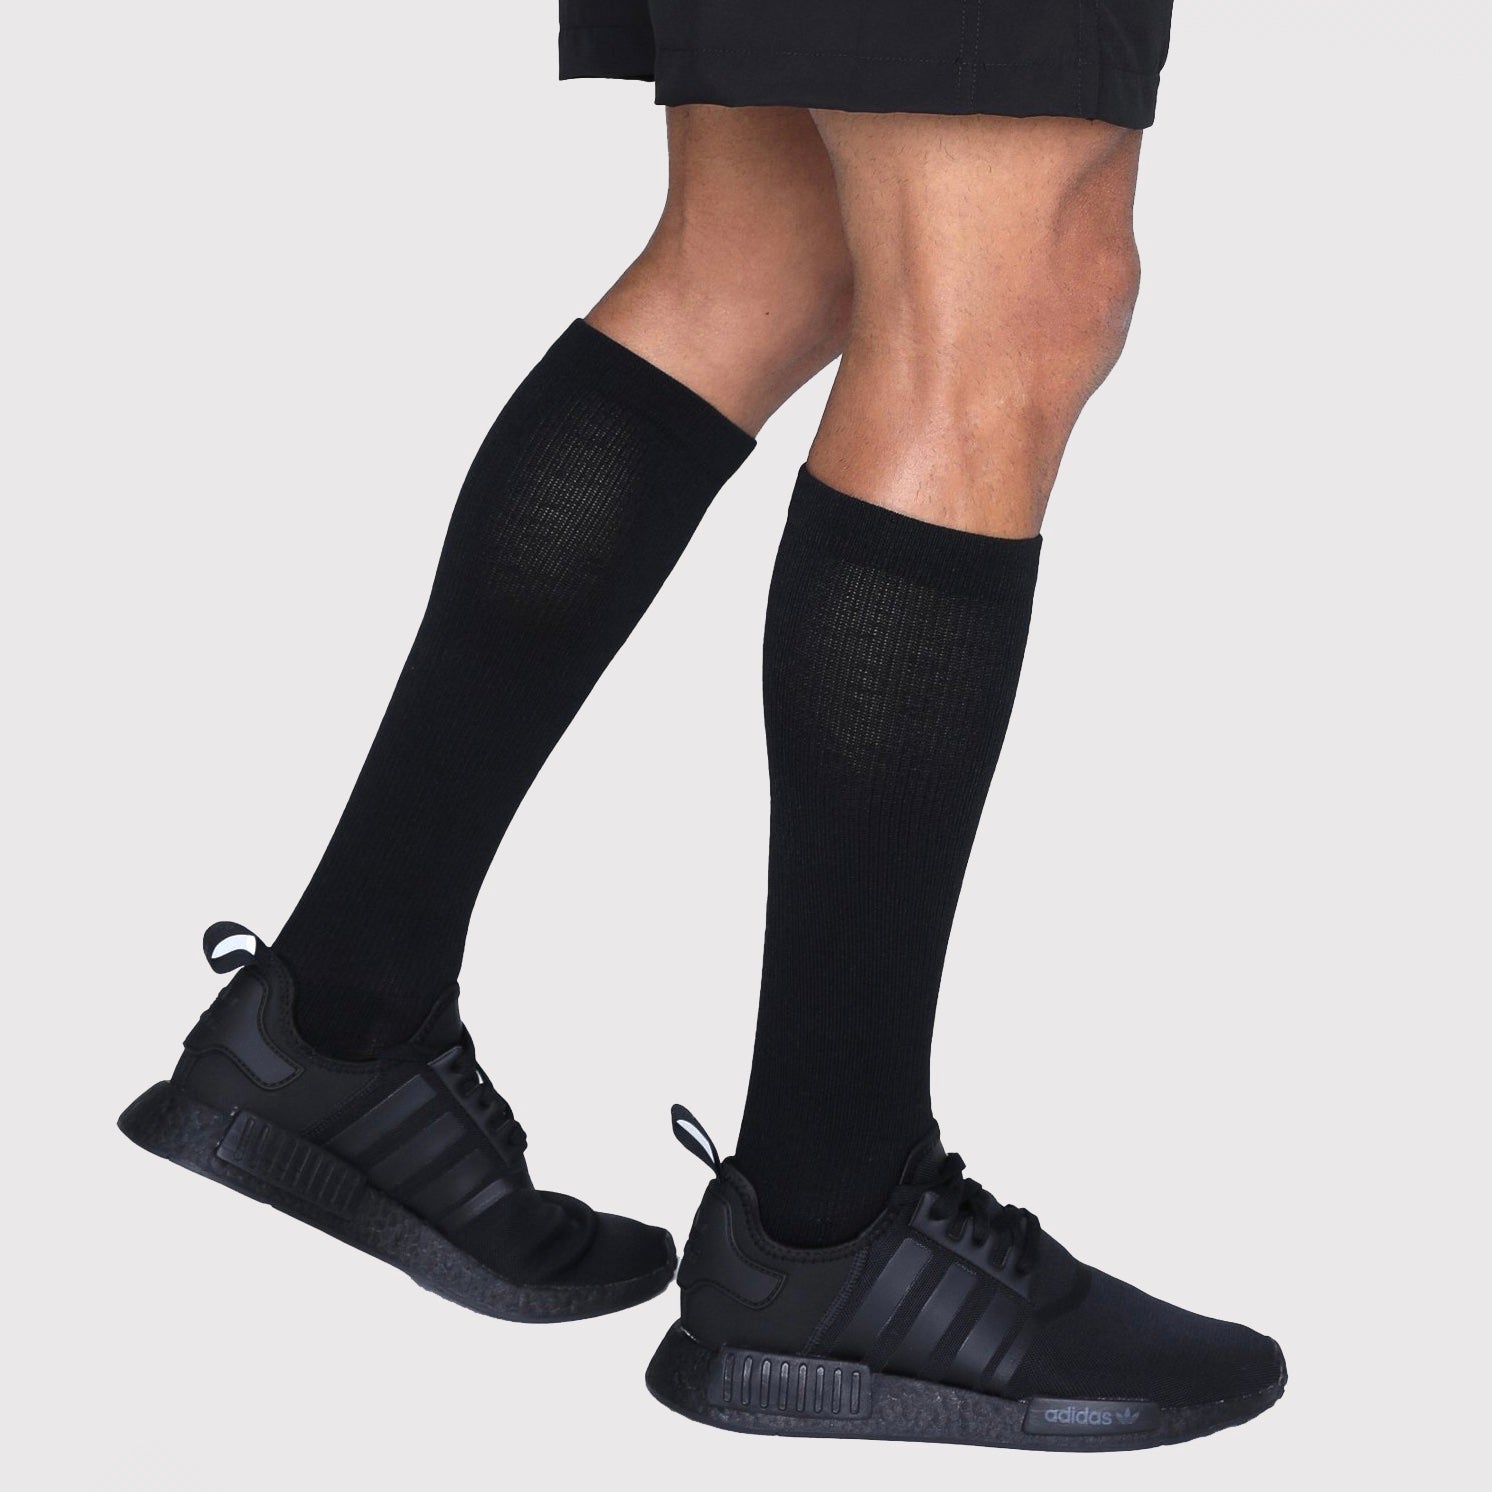 Sport Socks: Ankle & Crew Socks for Athletes - Copper Fit